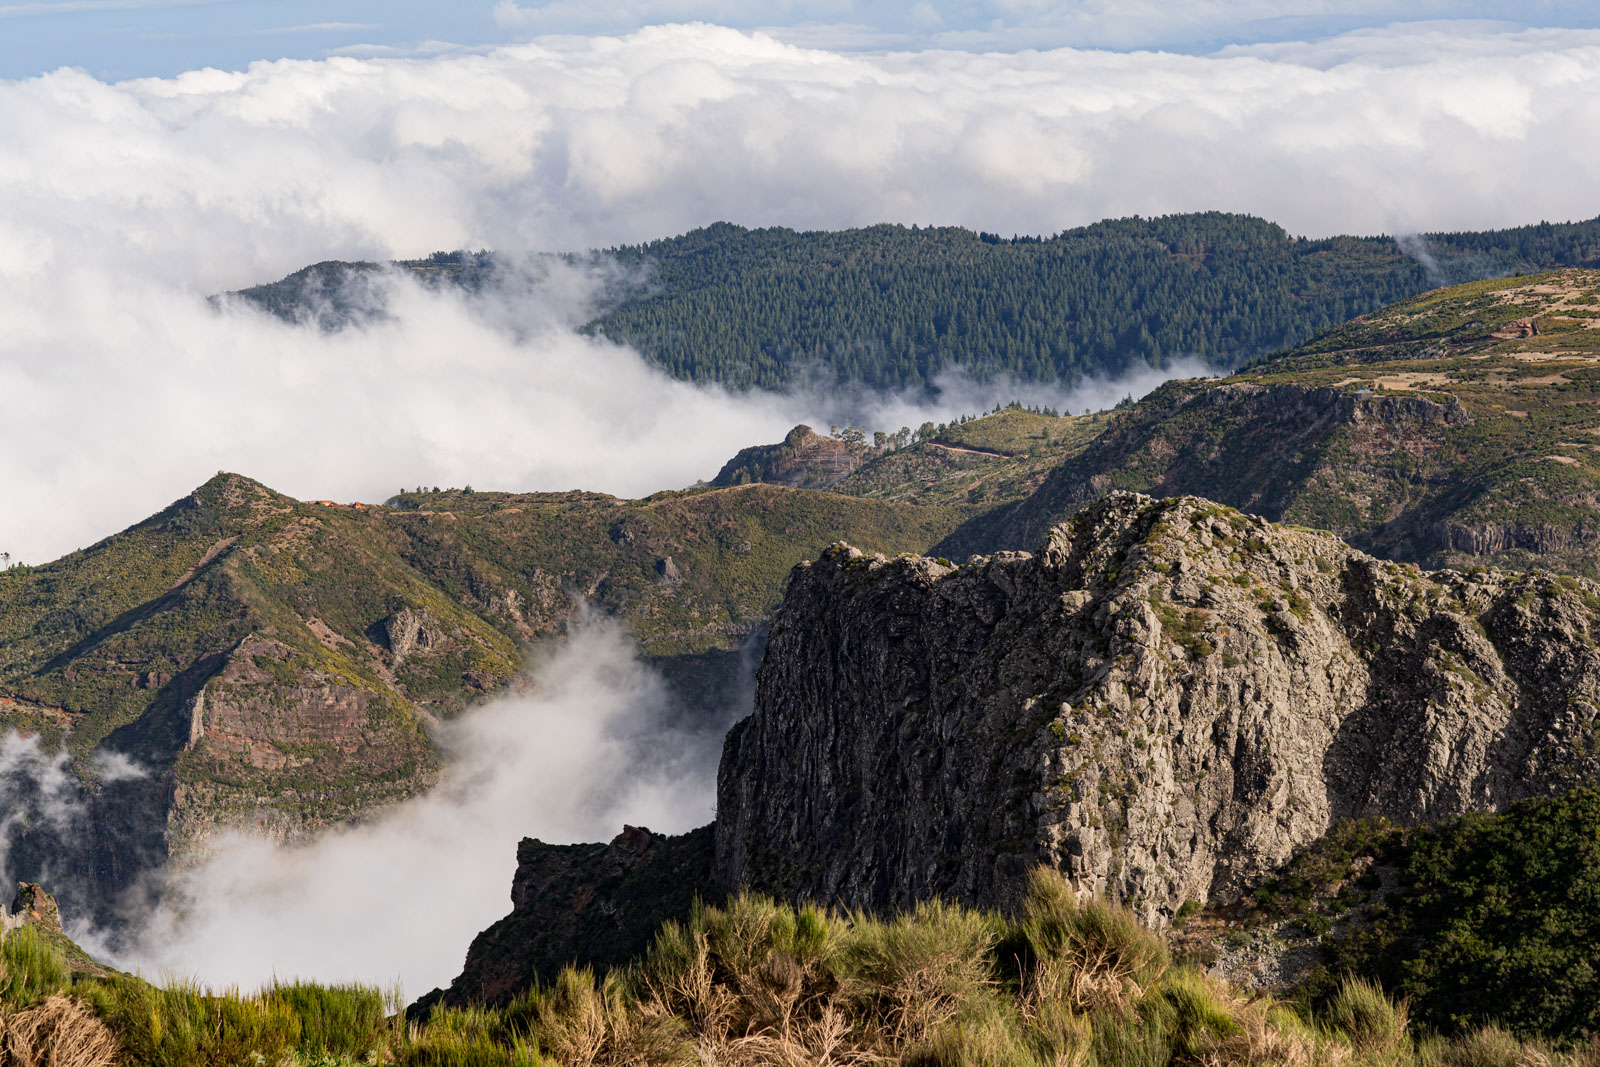 Navigating the mist towards clarity - Fog at Pico do Areeiro, Madeira